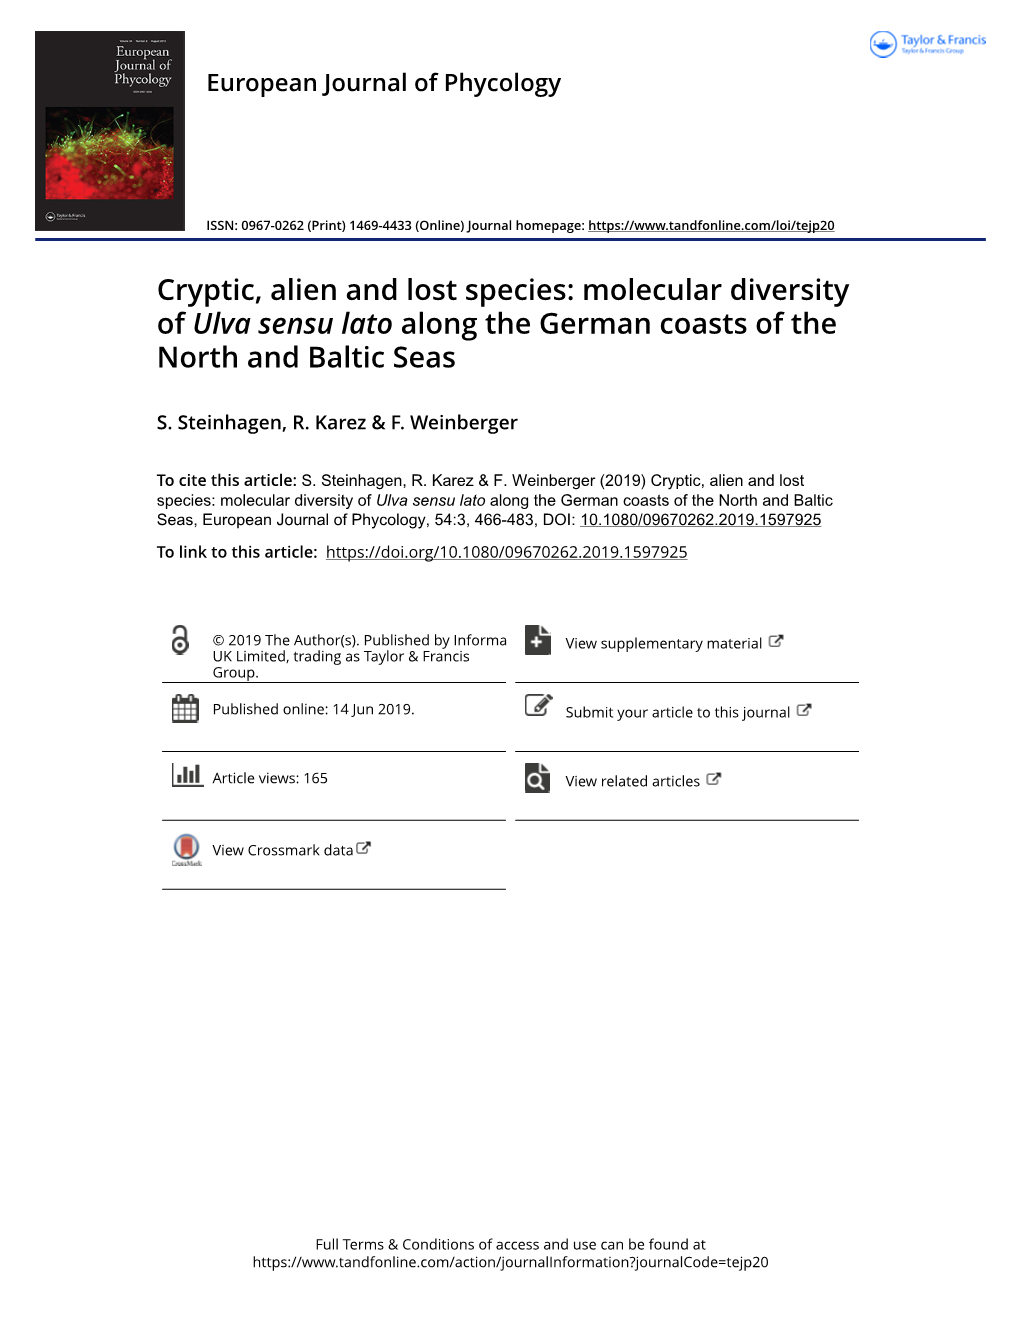 Cryptic, Alien and Lost Species: Molecular Diversity of Ulva Sensu Lato Along the German Coasts of the North and Baltic Seas